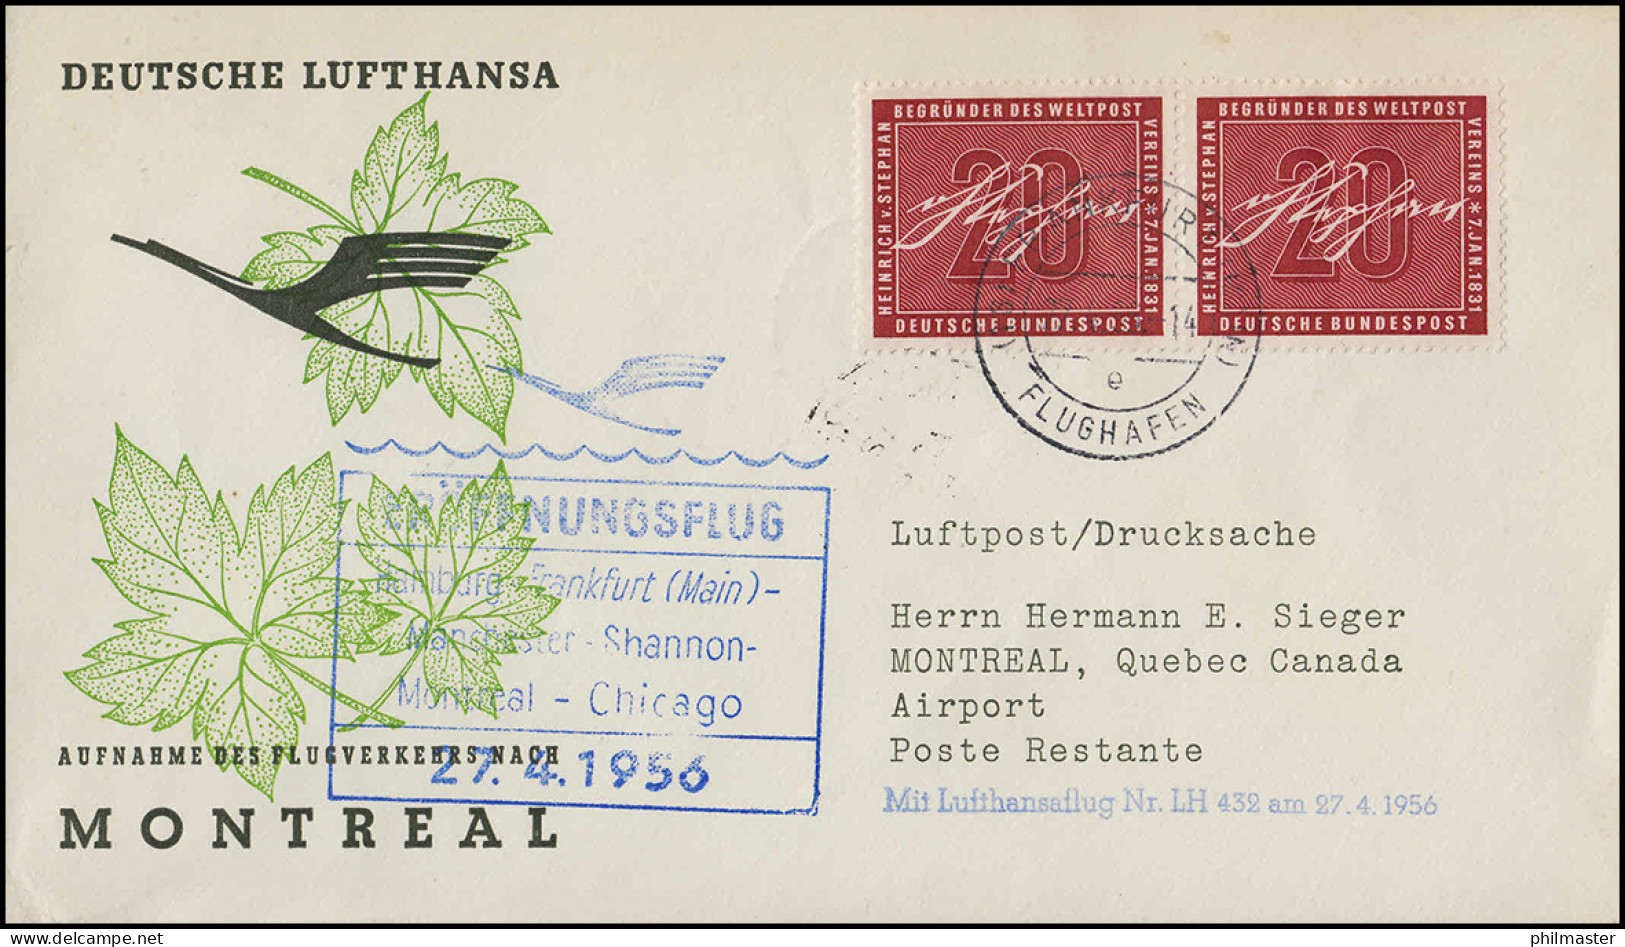 Eröffnungsflug Lufthansa LH 432 Montreal, Frankfurt 27.4.1956 / Montreal 28.4.56 - First Flight Covers